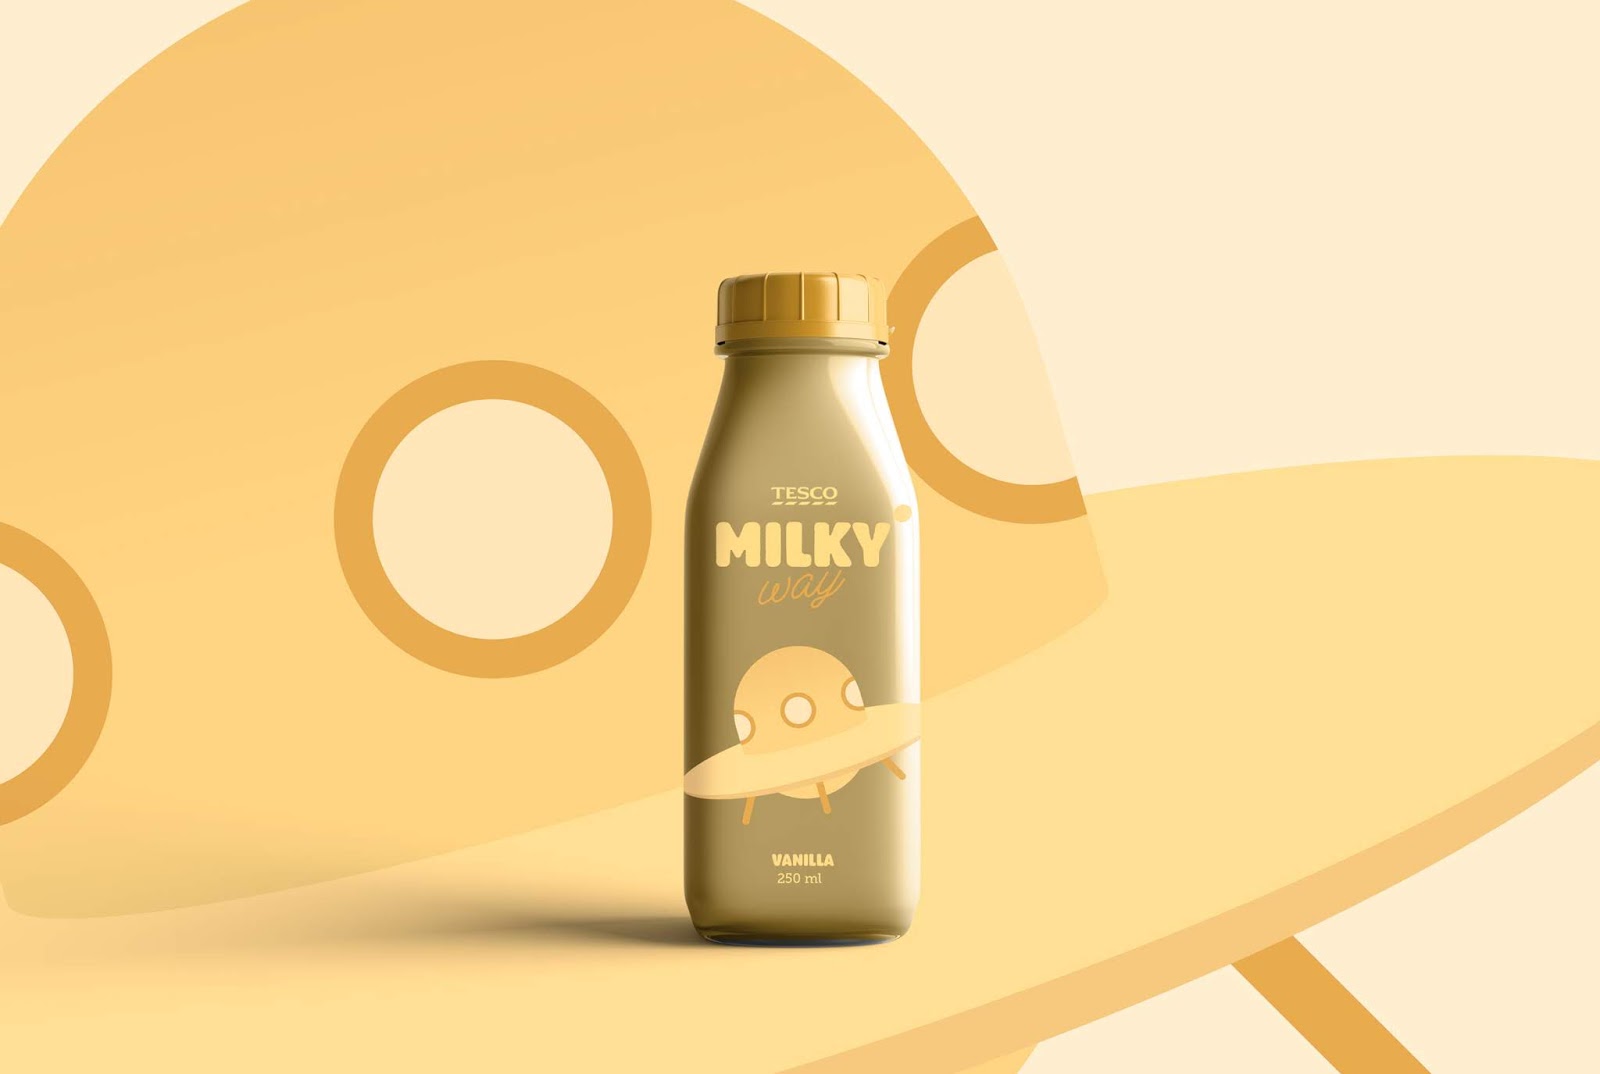 Milkyway奶昔品牌包装设计